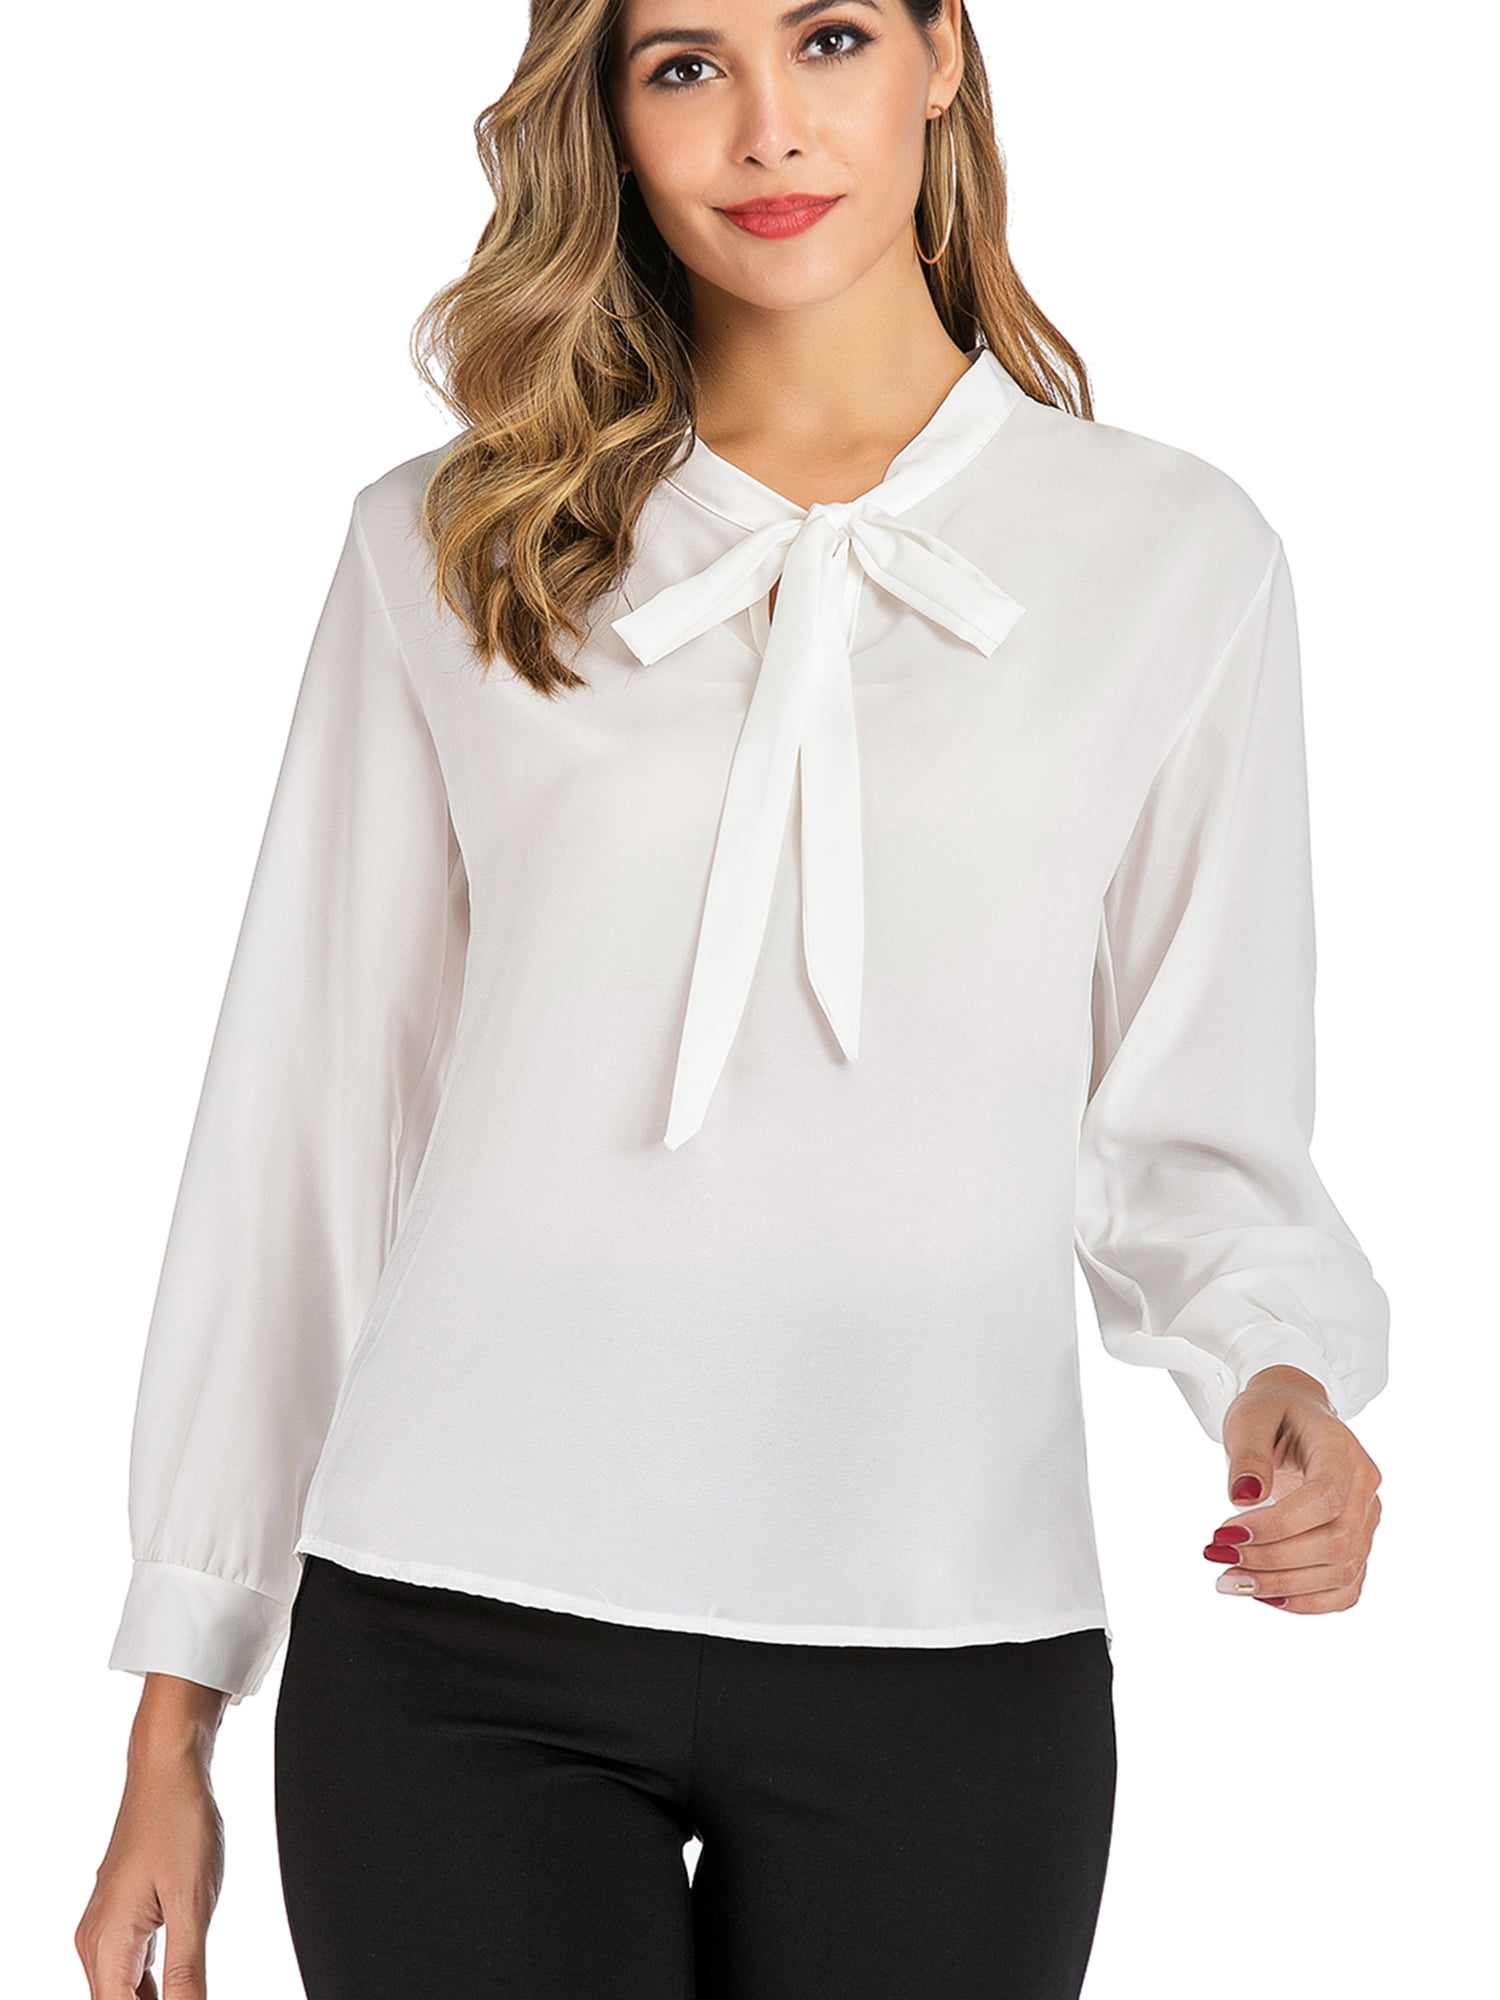 Womens Plus Size Chiffon Blouses Long Sleeve Casual V Neck Chiffon Blouses Tops Neck Ladies Work Shirt,White M-3XL - Walmart.com